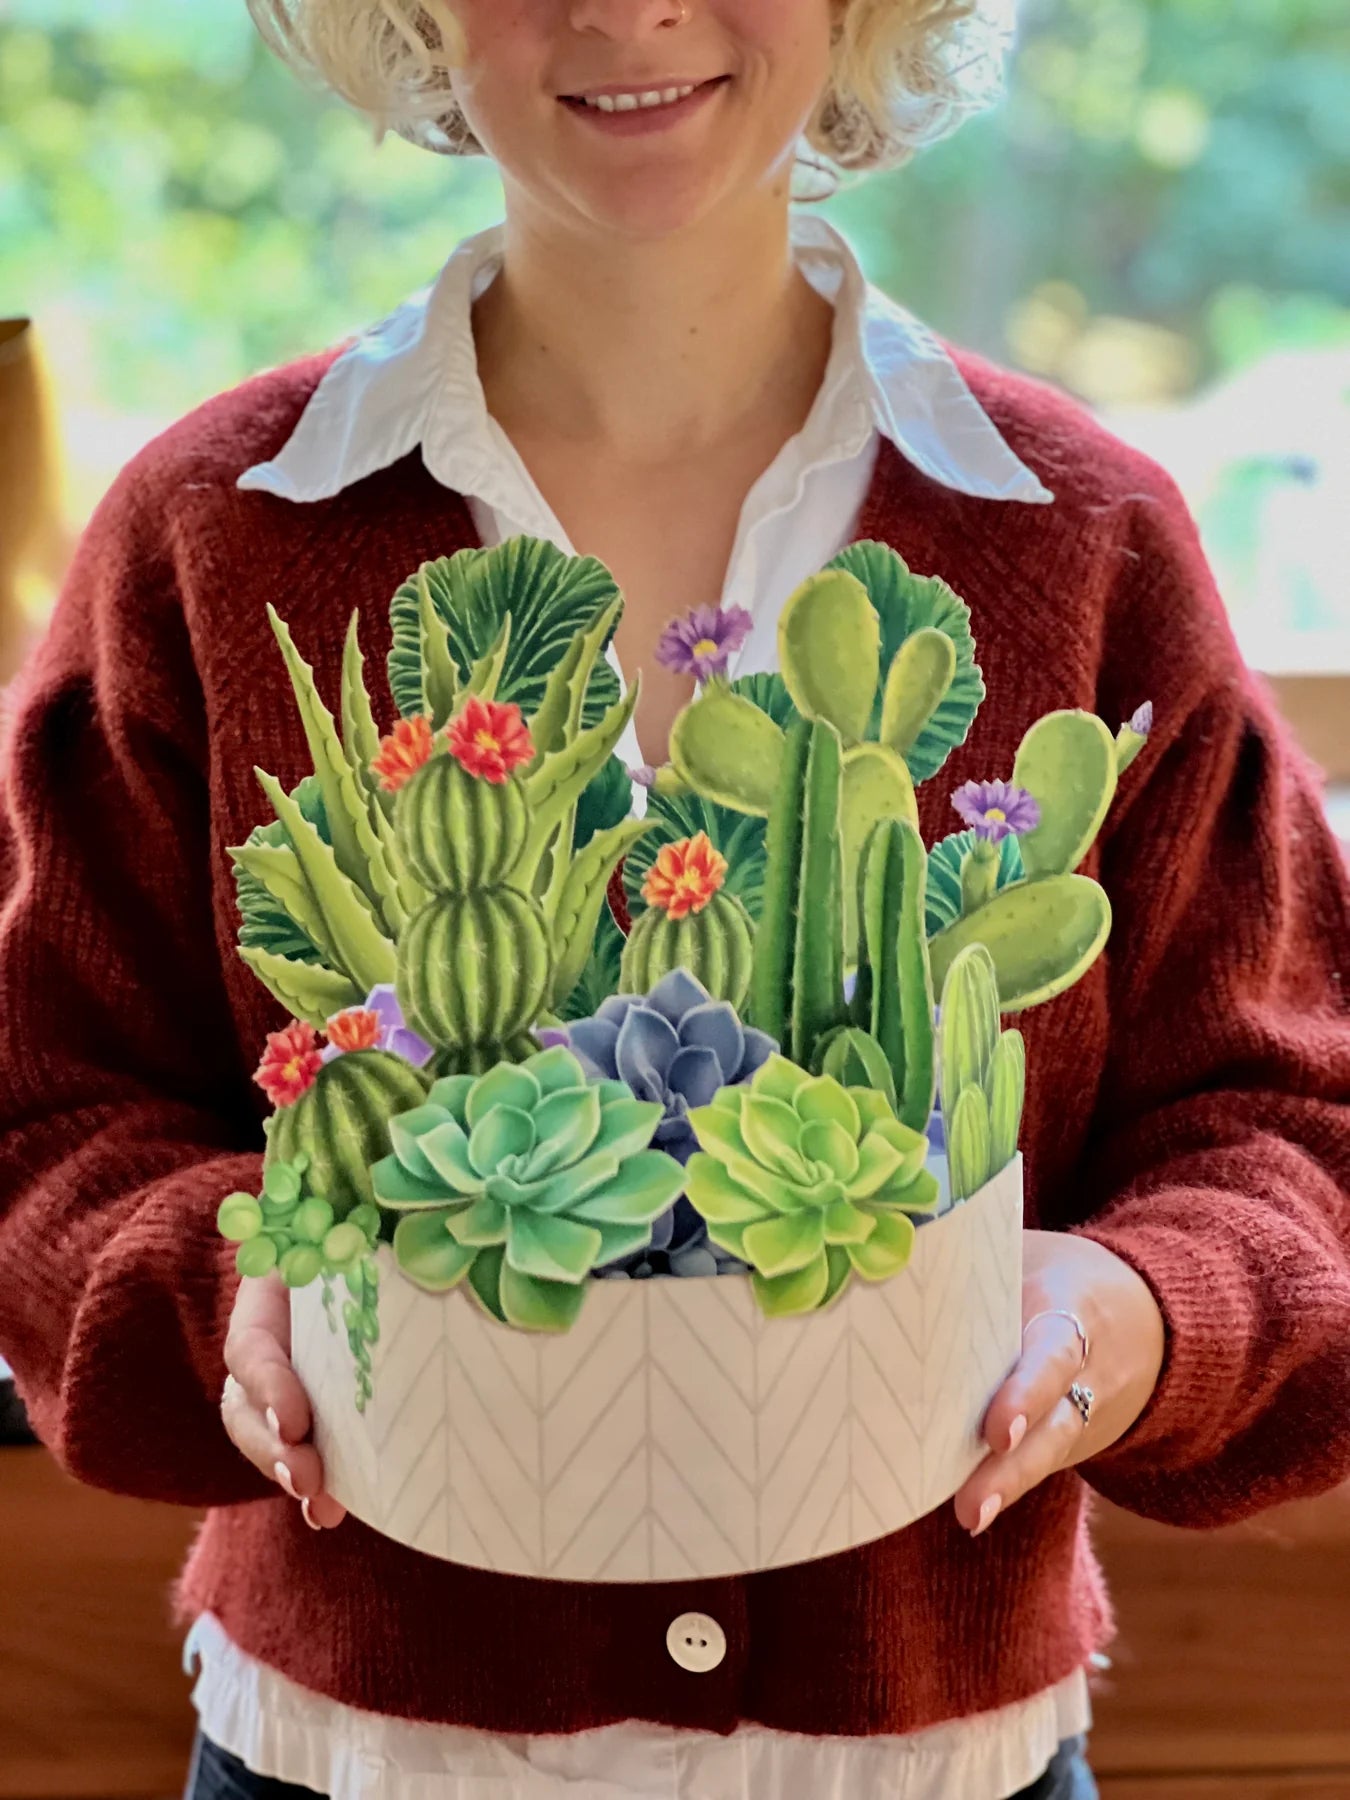 Cactus Garden Pop-up Bouquet